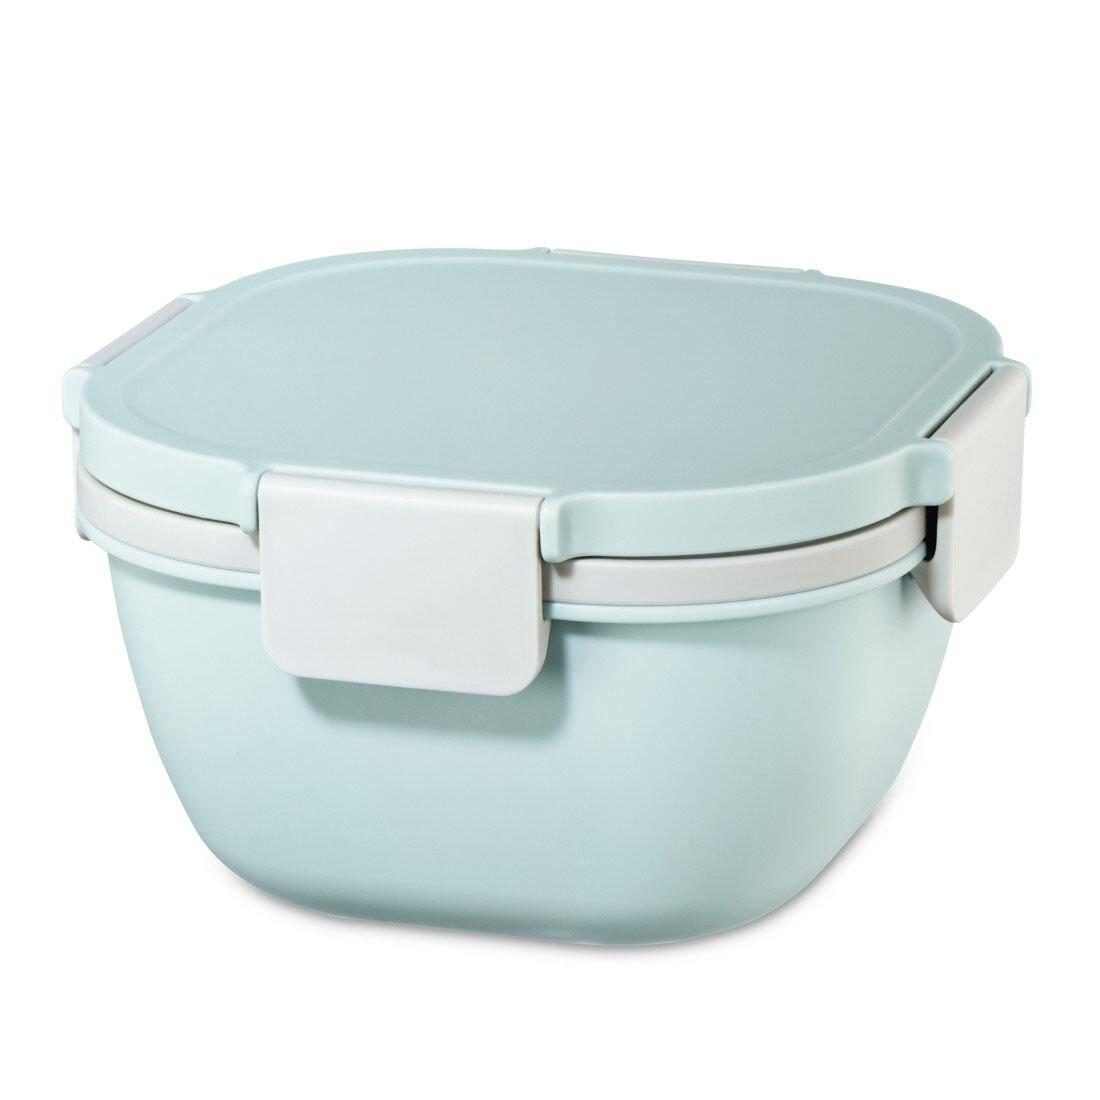 xavax® Lunchbox Salatbox To Go 10.5 cm hoch 1,4 l pastellblau, grau von xavax®